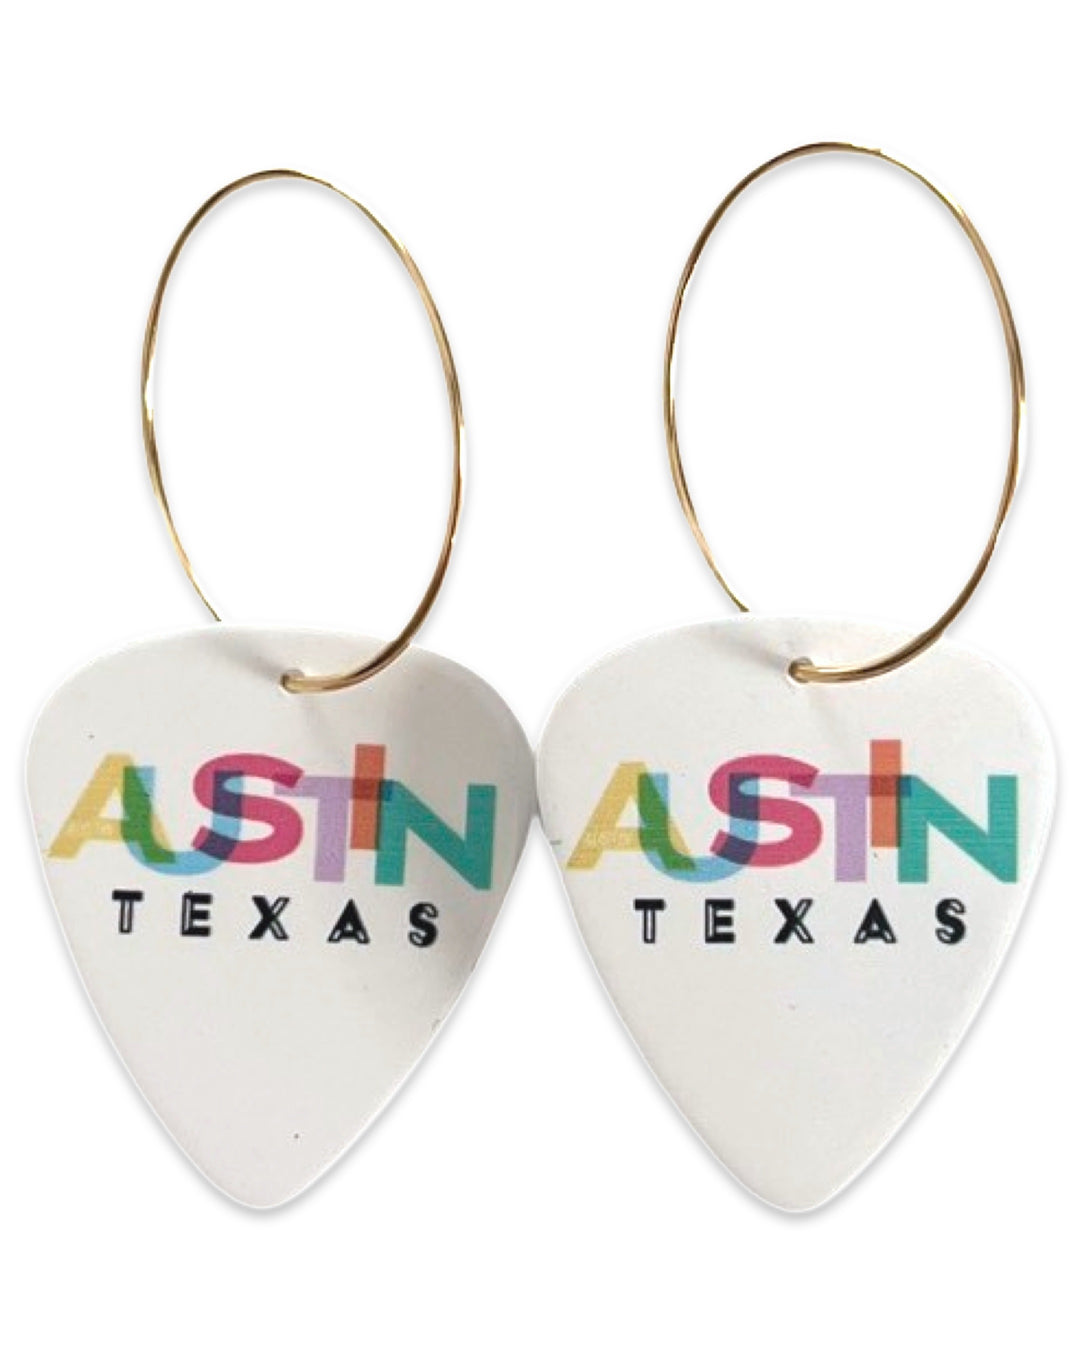 Austin Texas Reversible Single Guitar Pick Earrings